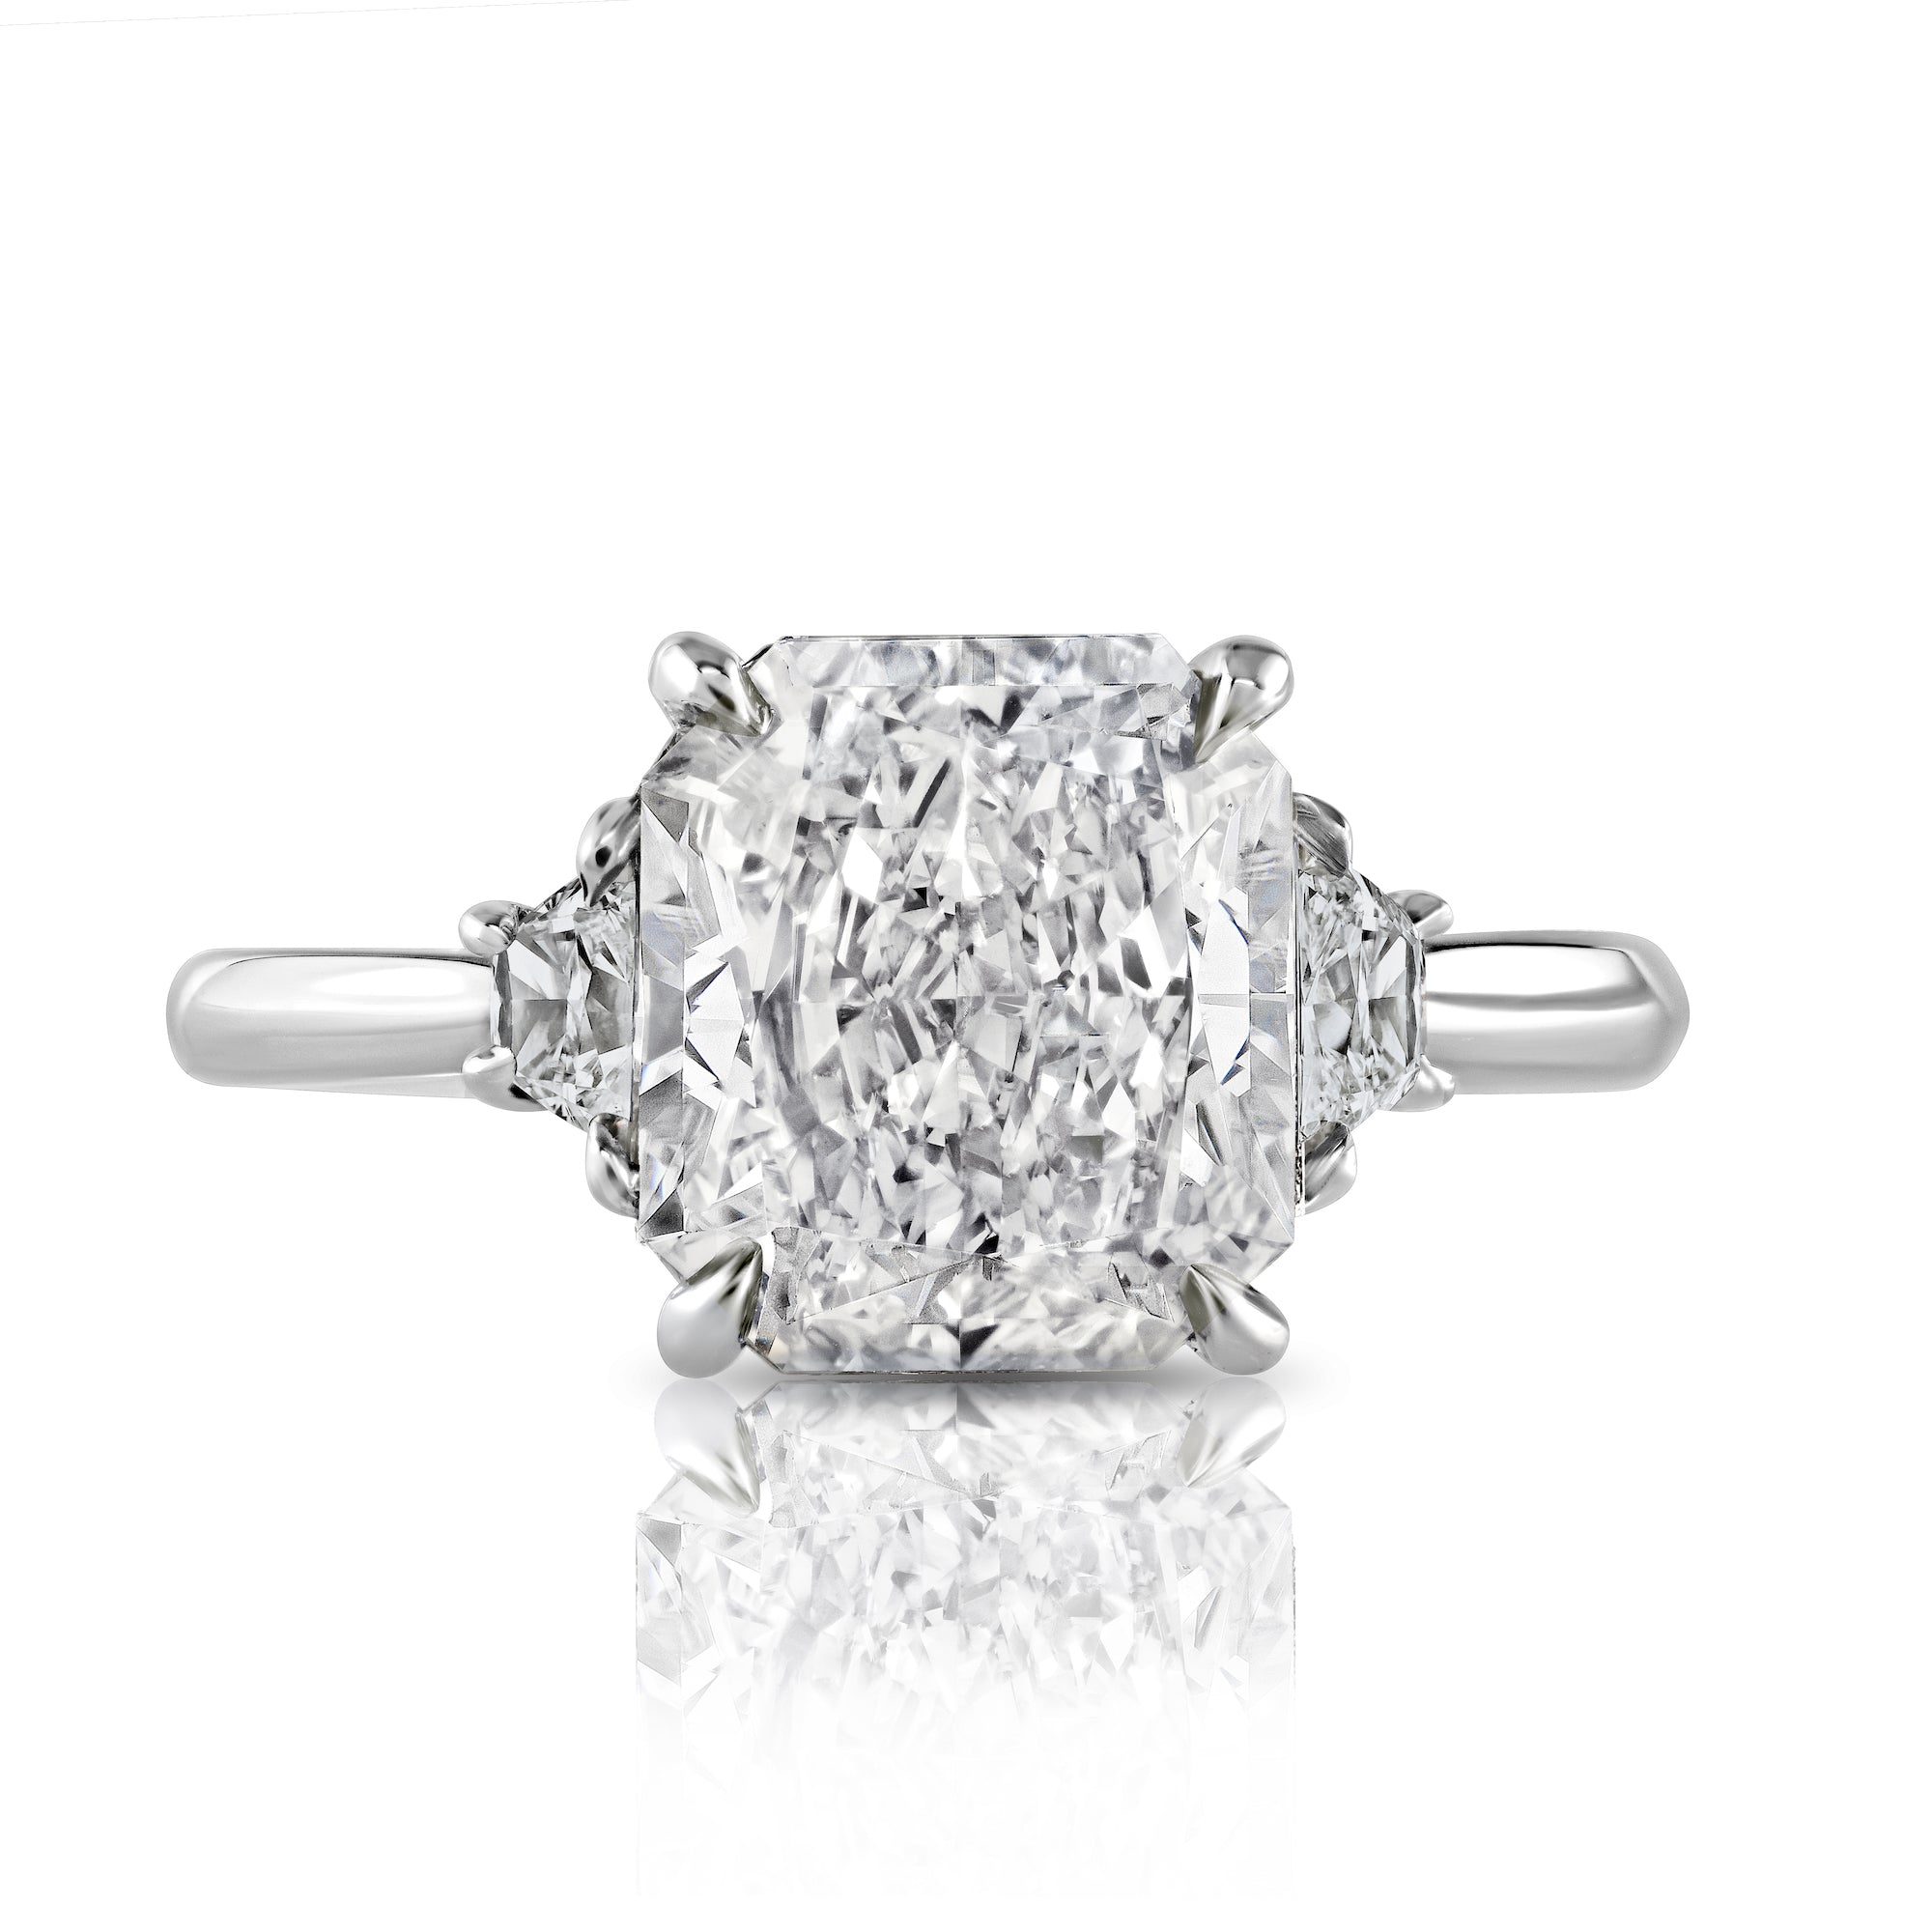 Three Stone Diamond Ring with Half-Moon Cuts, 4.02 CT - Rings - Leviev Diamonds